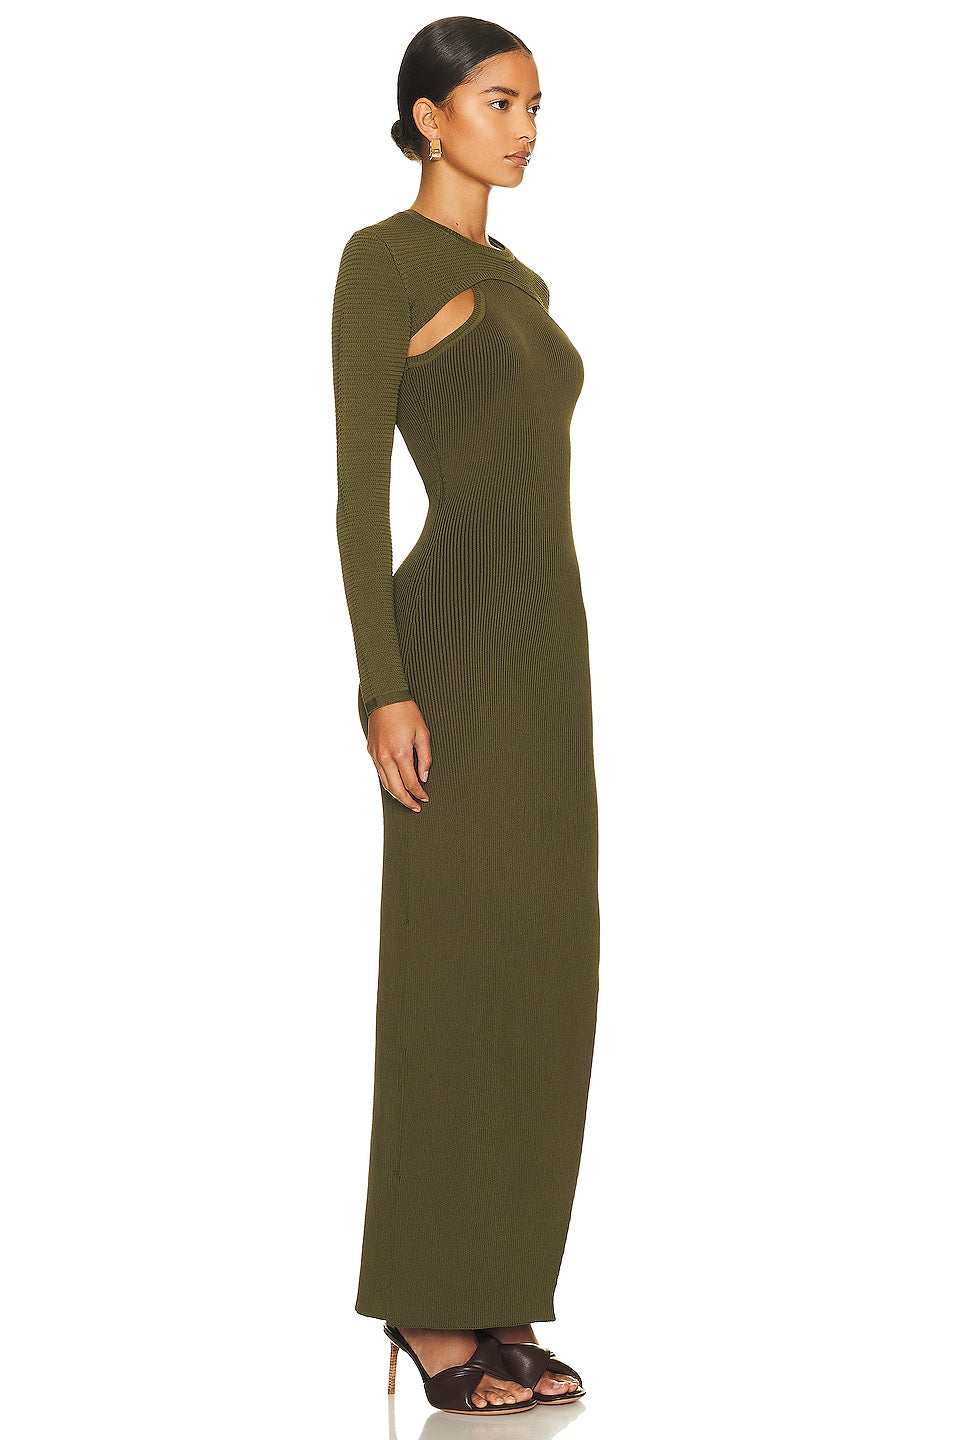 SER.O.YA Valvid Dress in Olive Combo